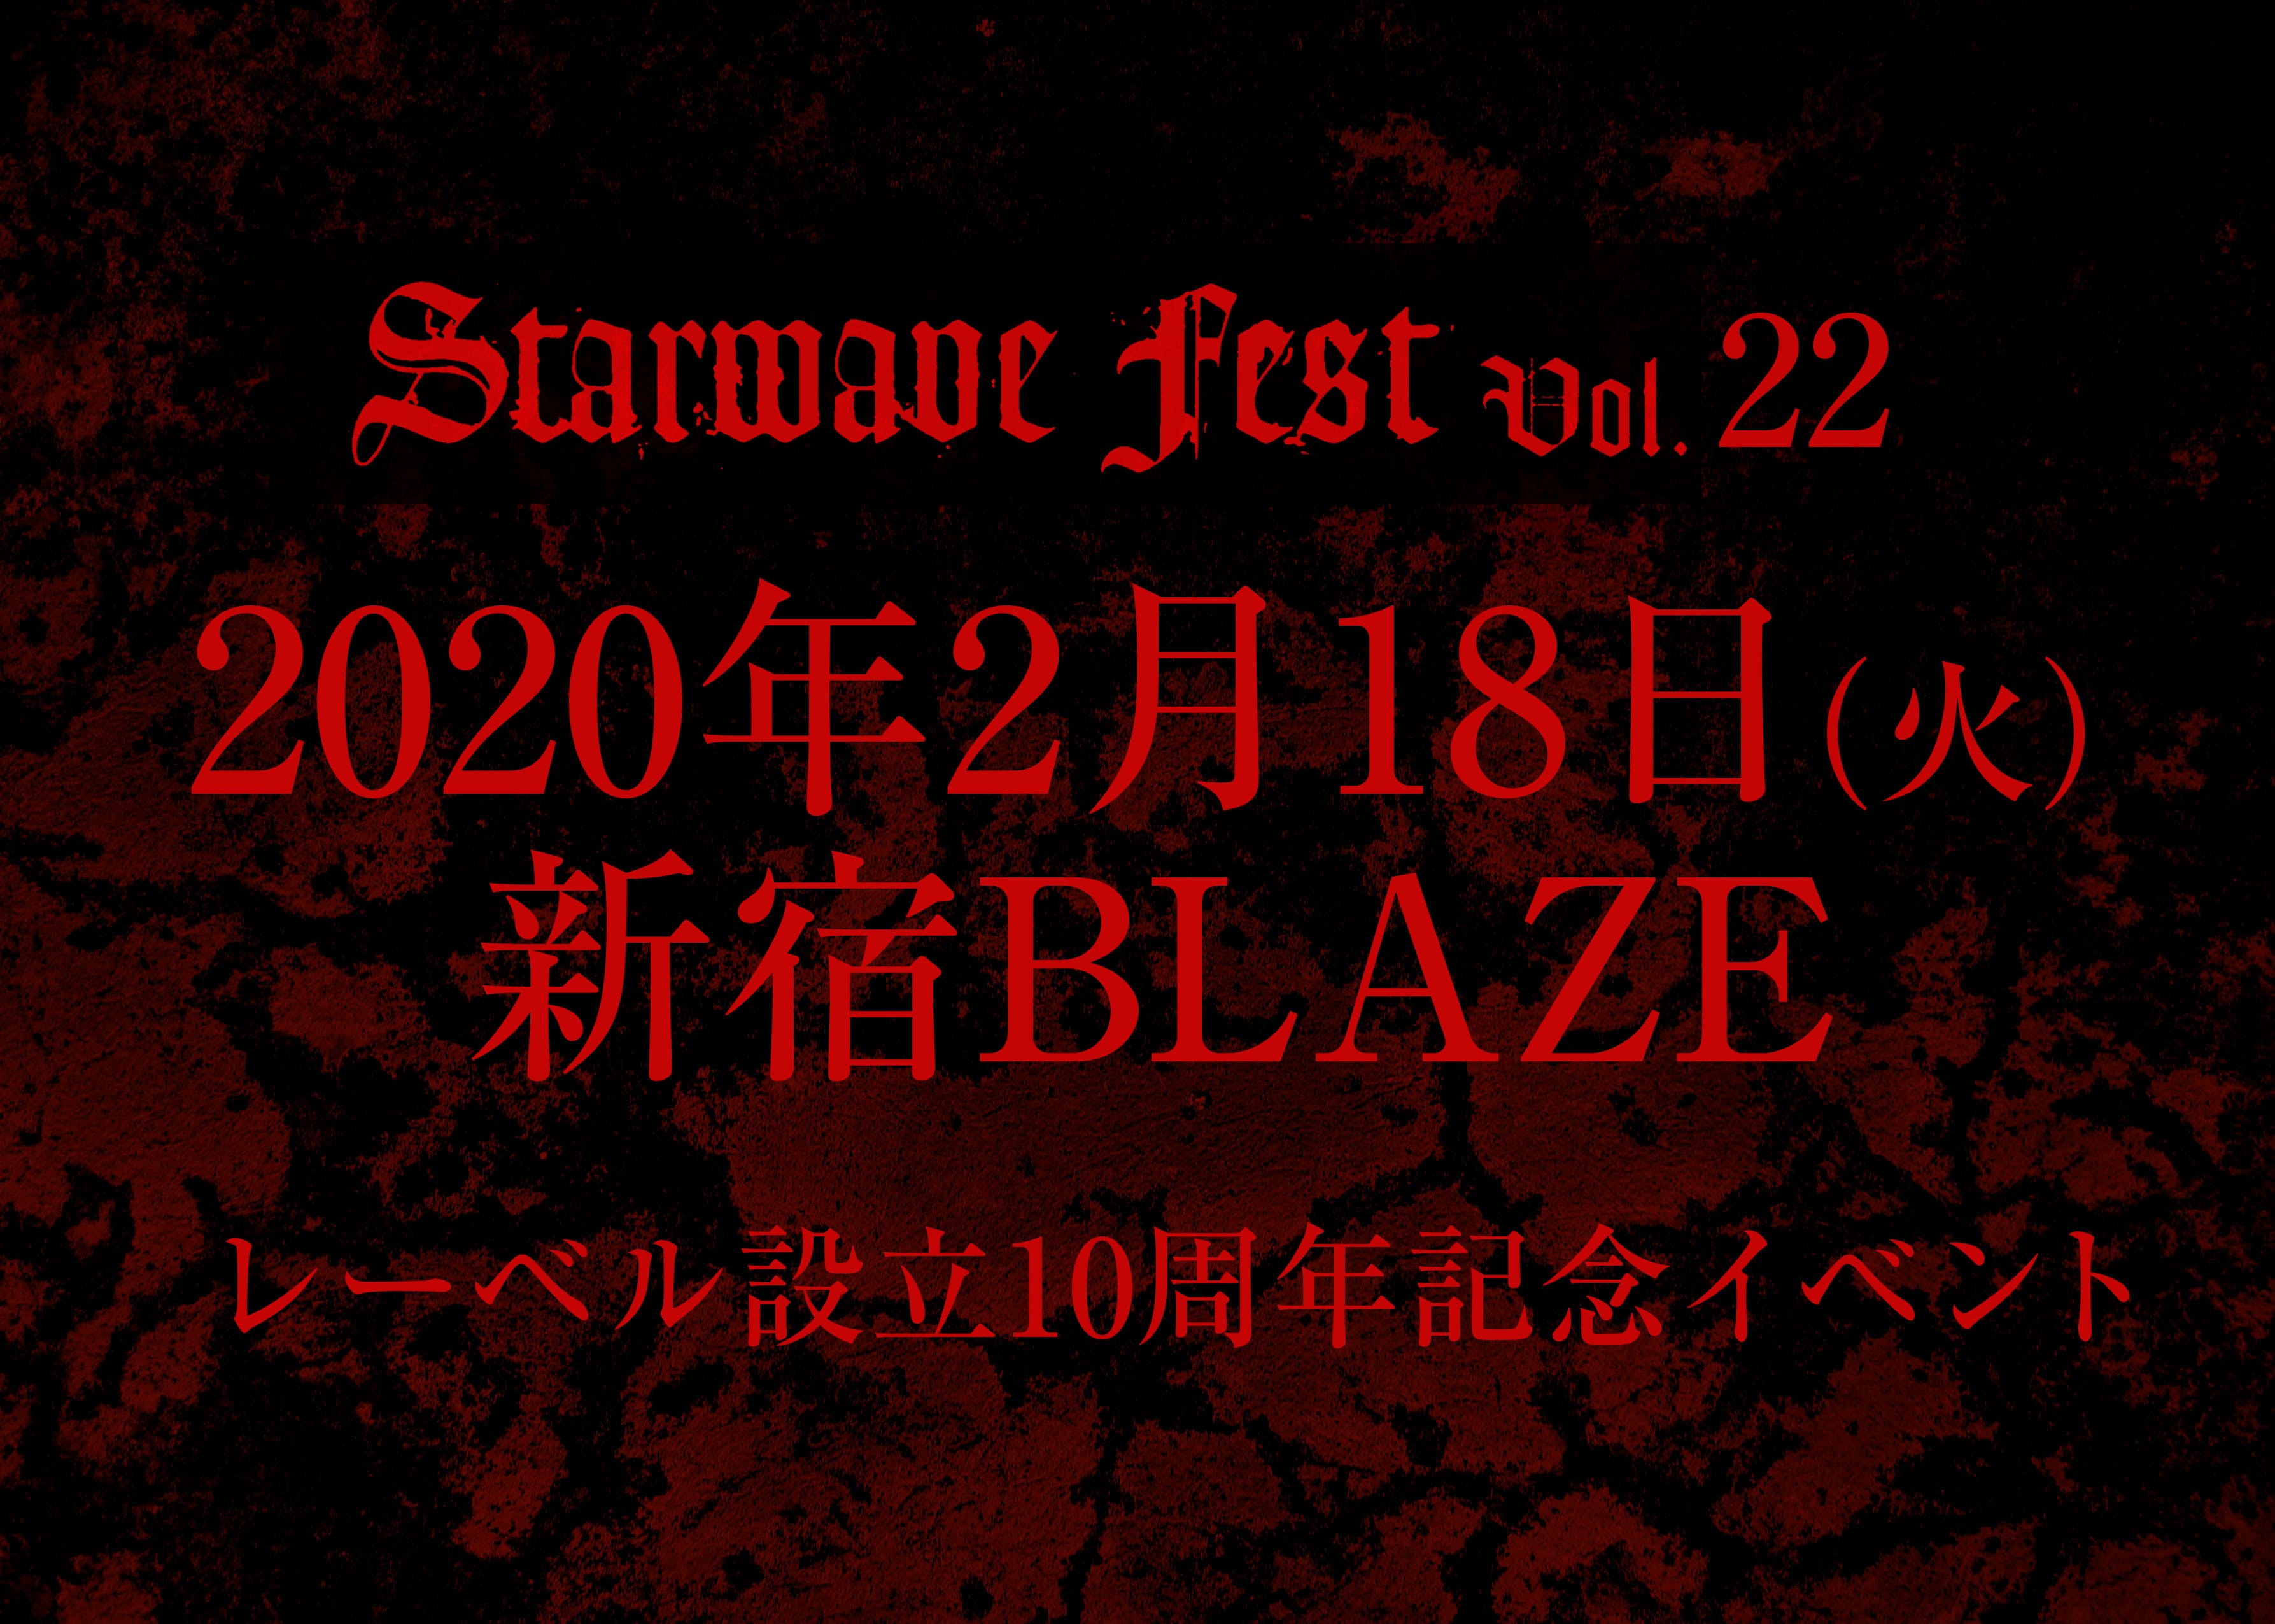 Starwave Records celebrates 10th anniversary this February at Shinjuku BLAZE! [PR]